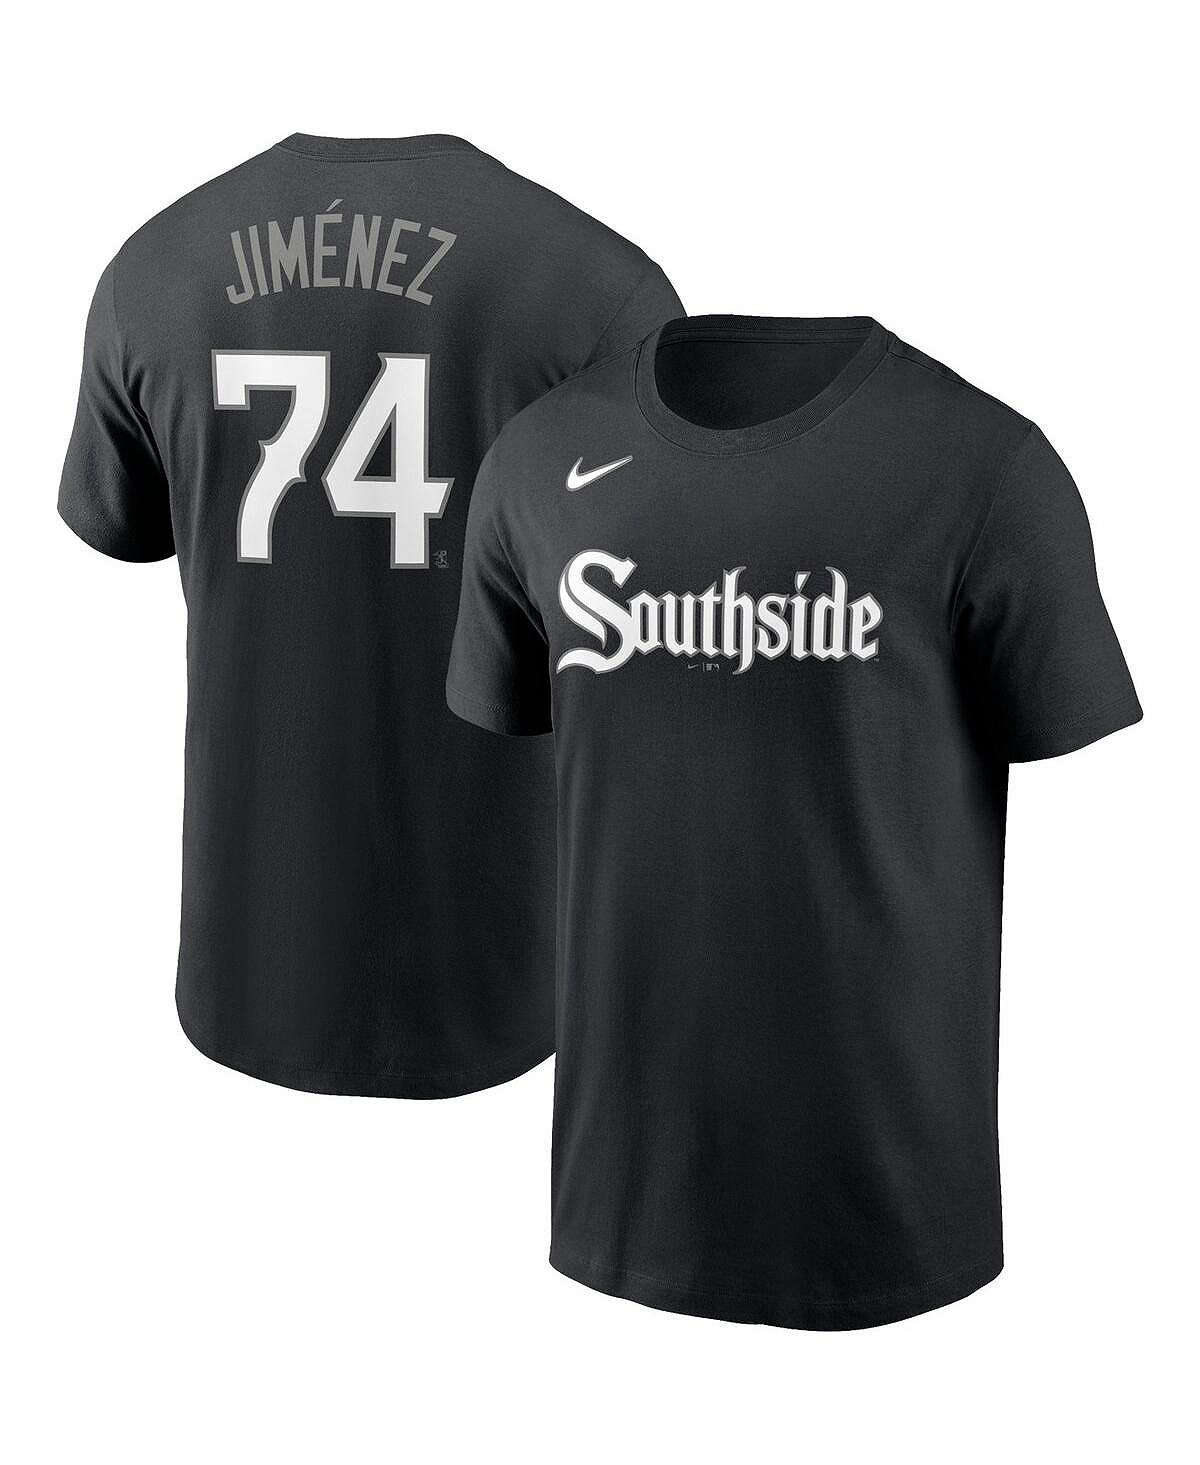 Мужская футболка Eloy Jimenez Black Chicago White Sox City Connect с именем и номером Nike мужская черная футболка randy johnson arizona diamondbacks city connect с именем и номером nike